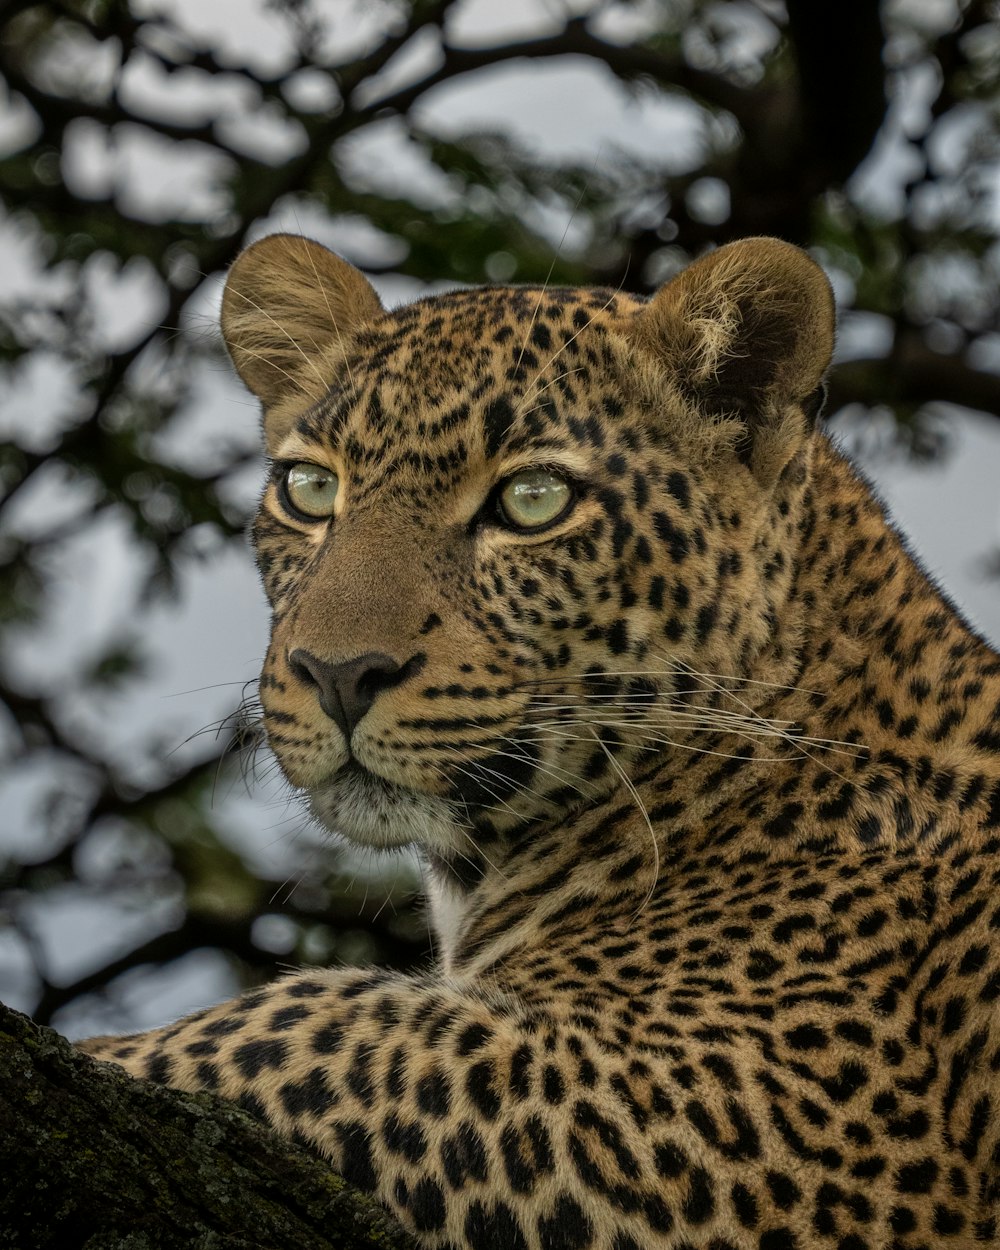 léopard brun et noir en gros plan